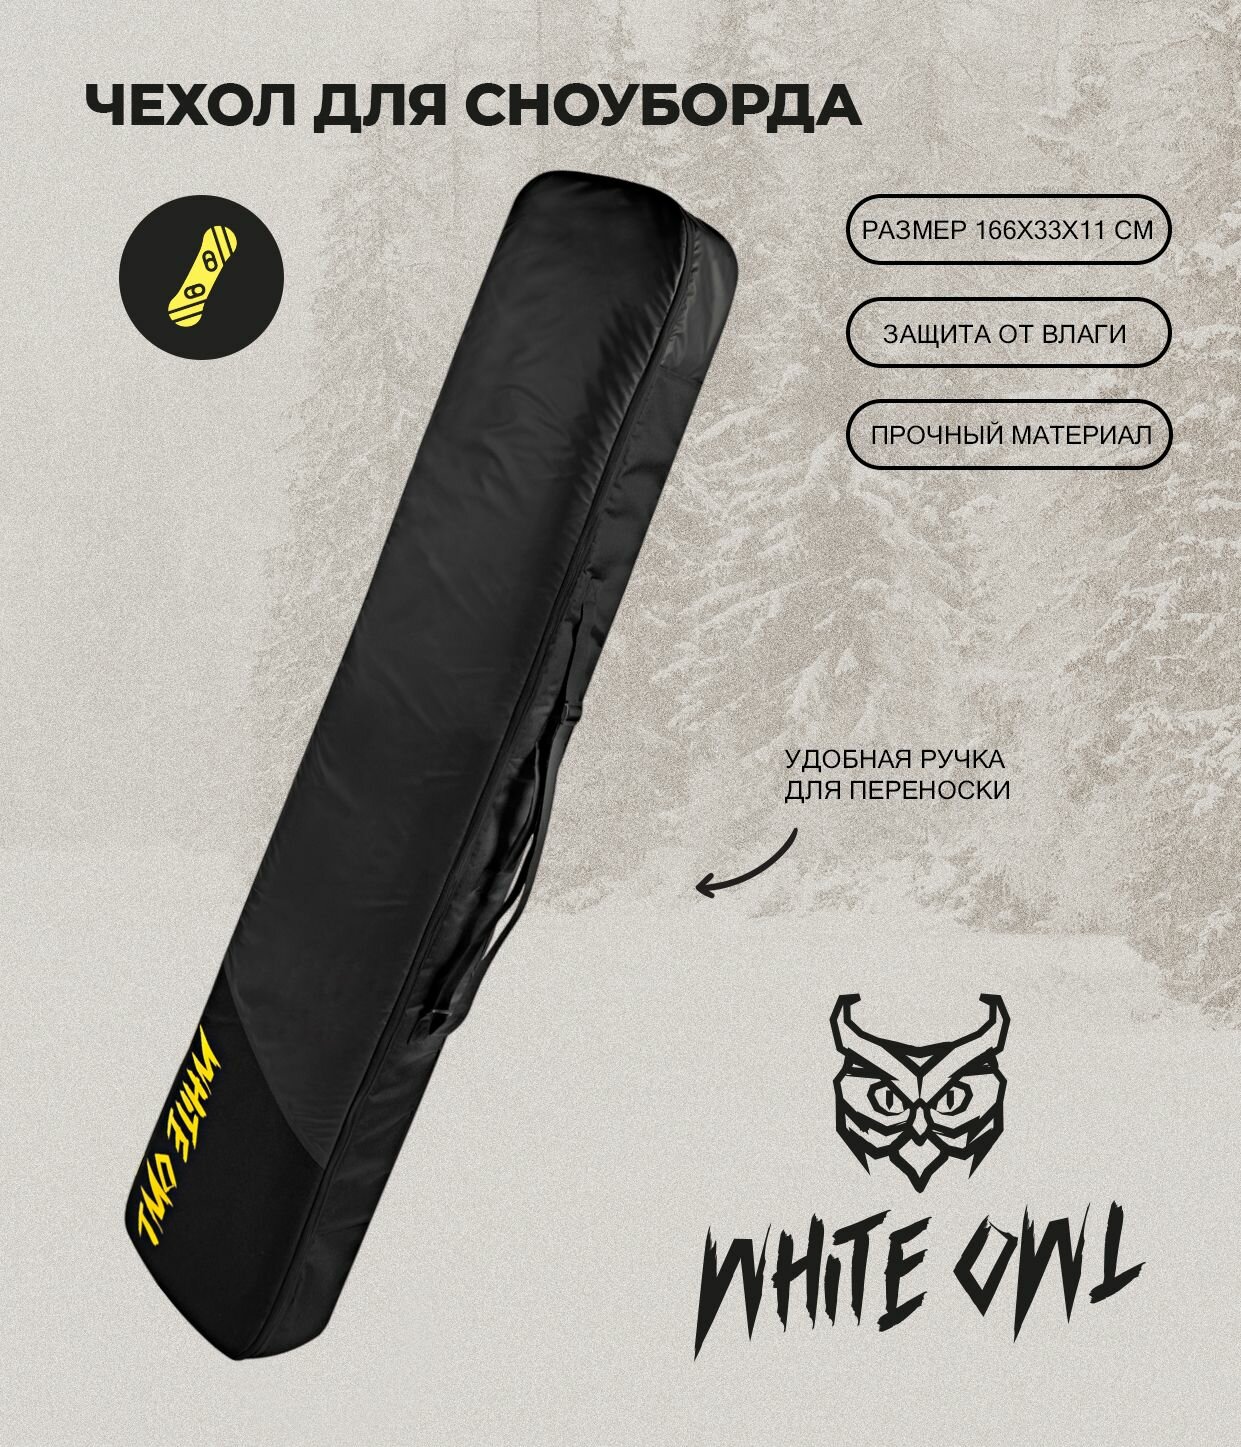 Чехол для сноуборда White Owl, утолщенный, 166х33х11 см, черный